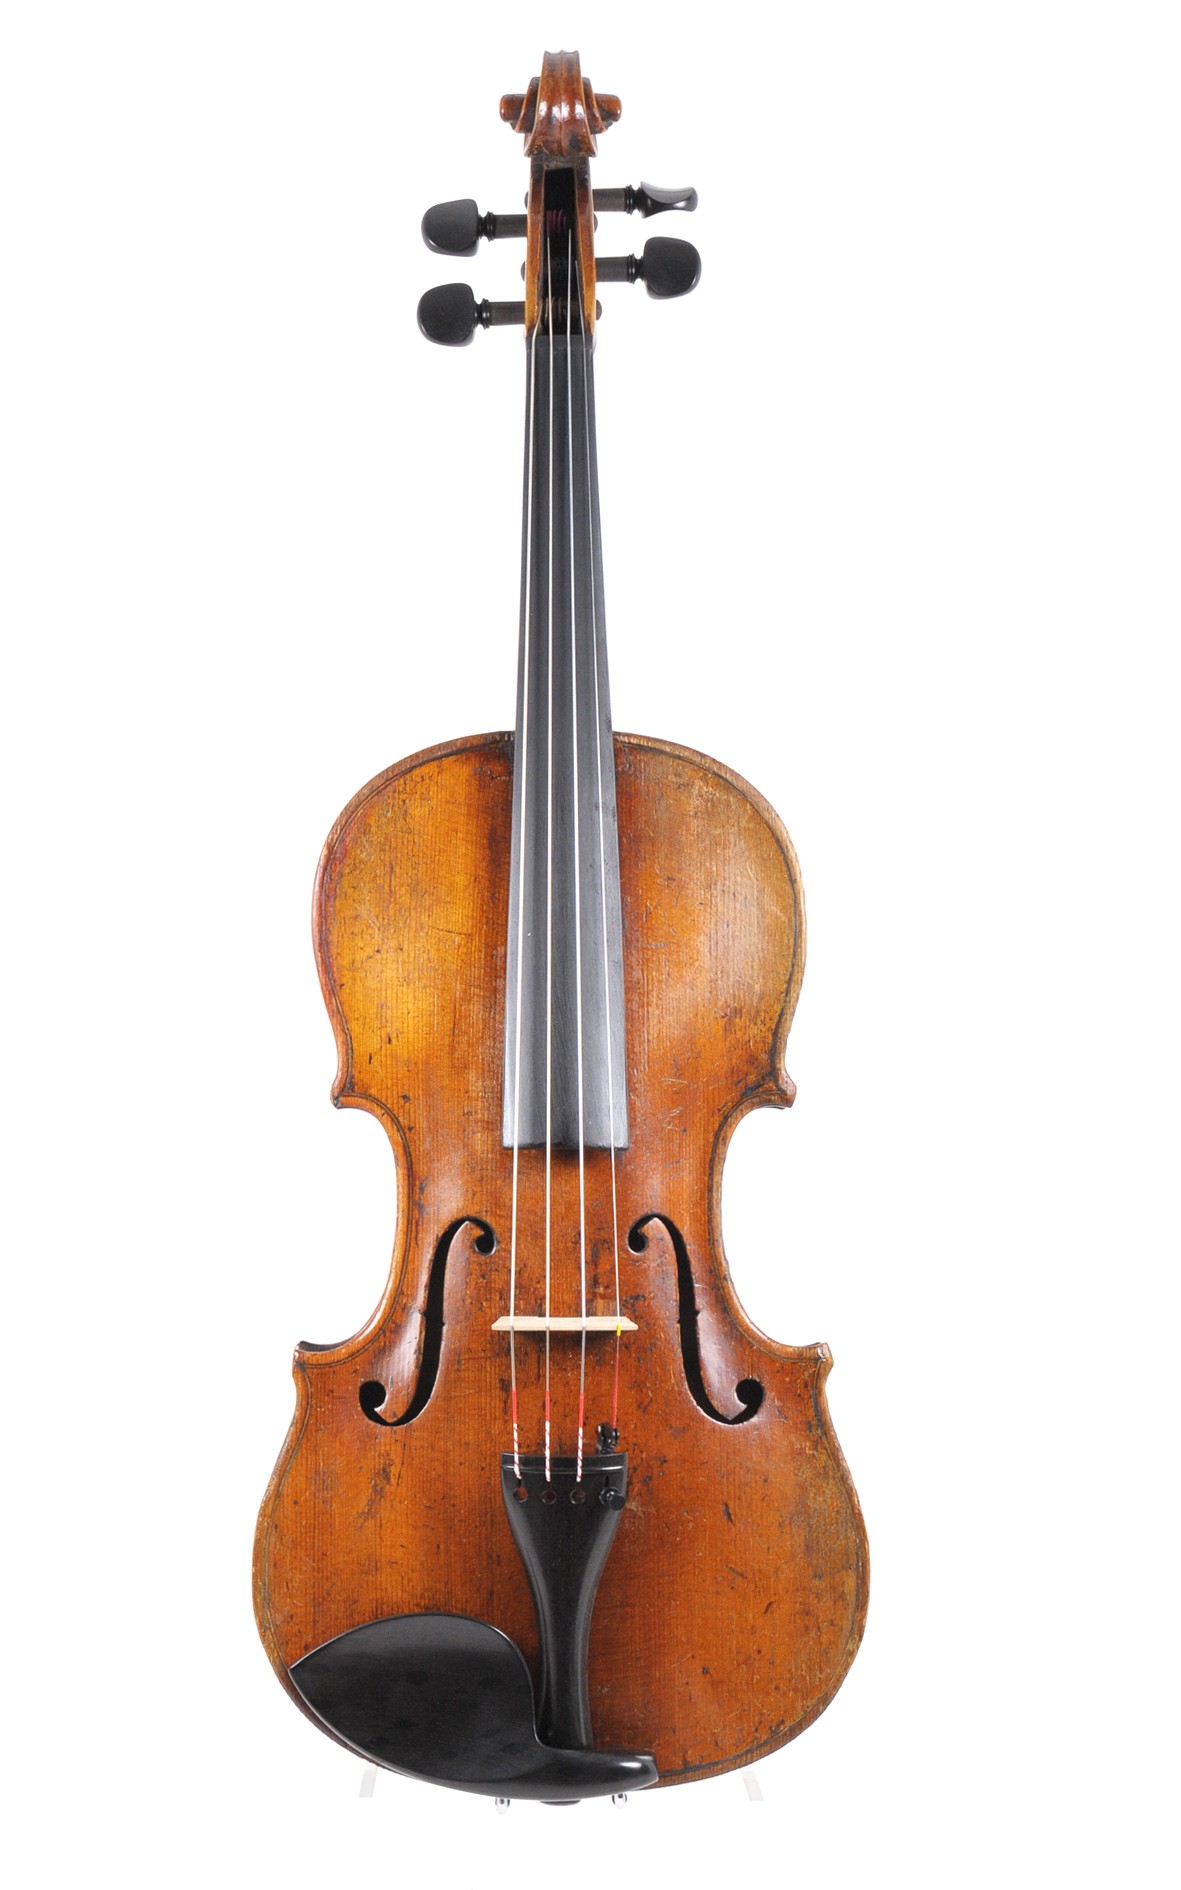 Hopf violin, Klingenthal, around 1800 - top